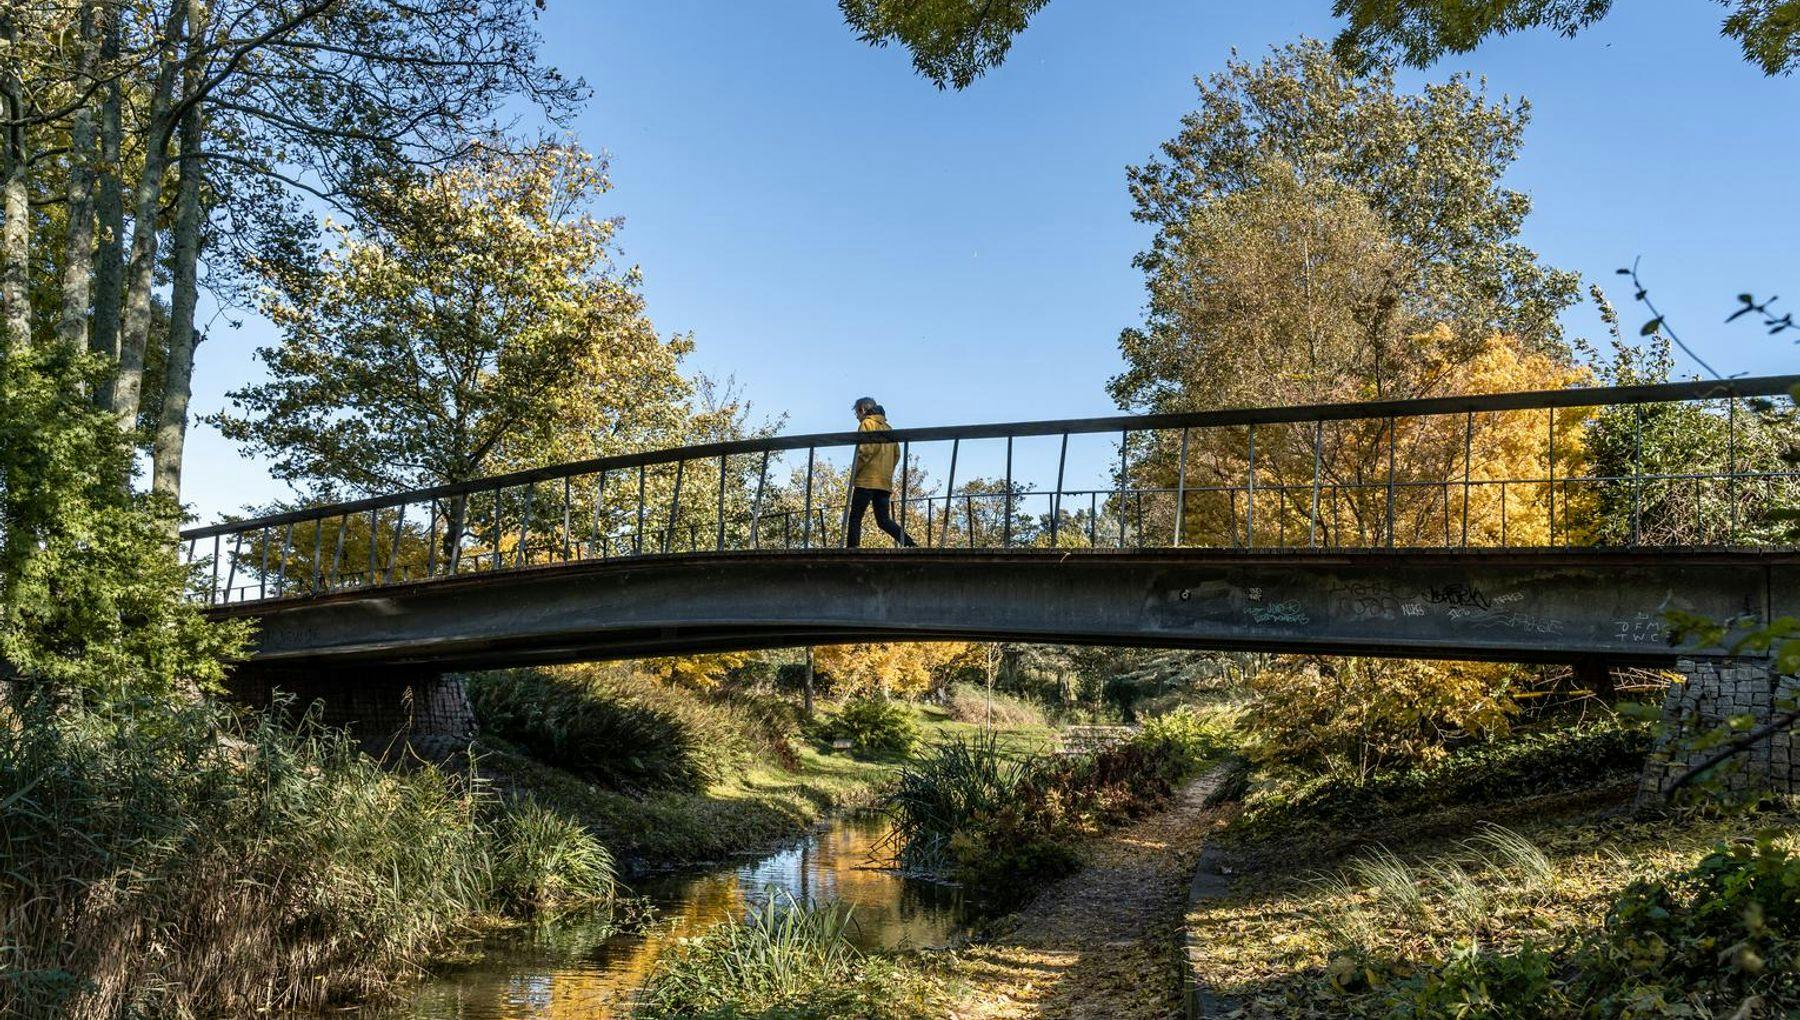 Walking over a bridge in Westerpark